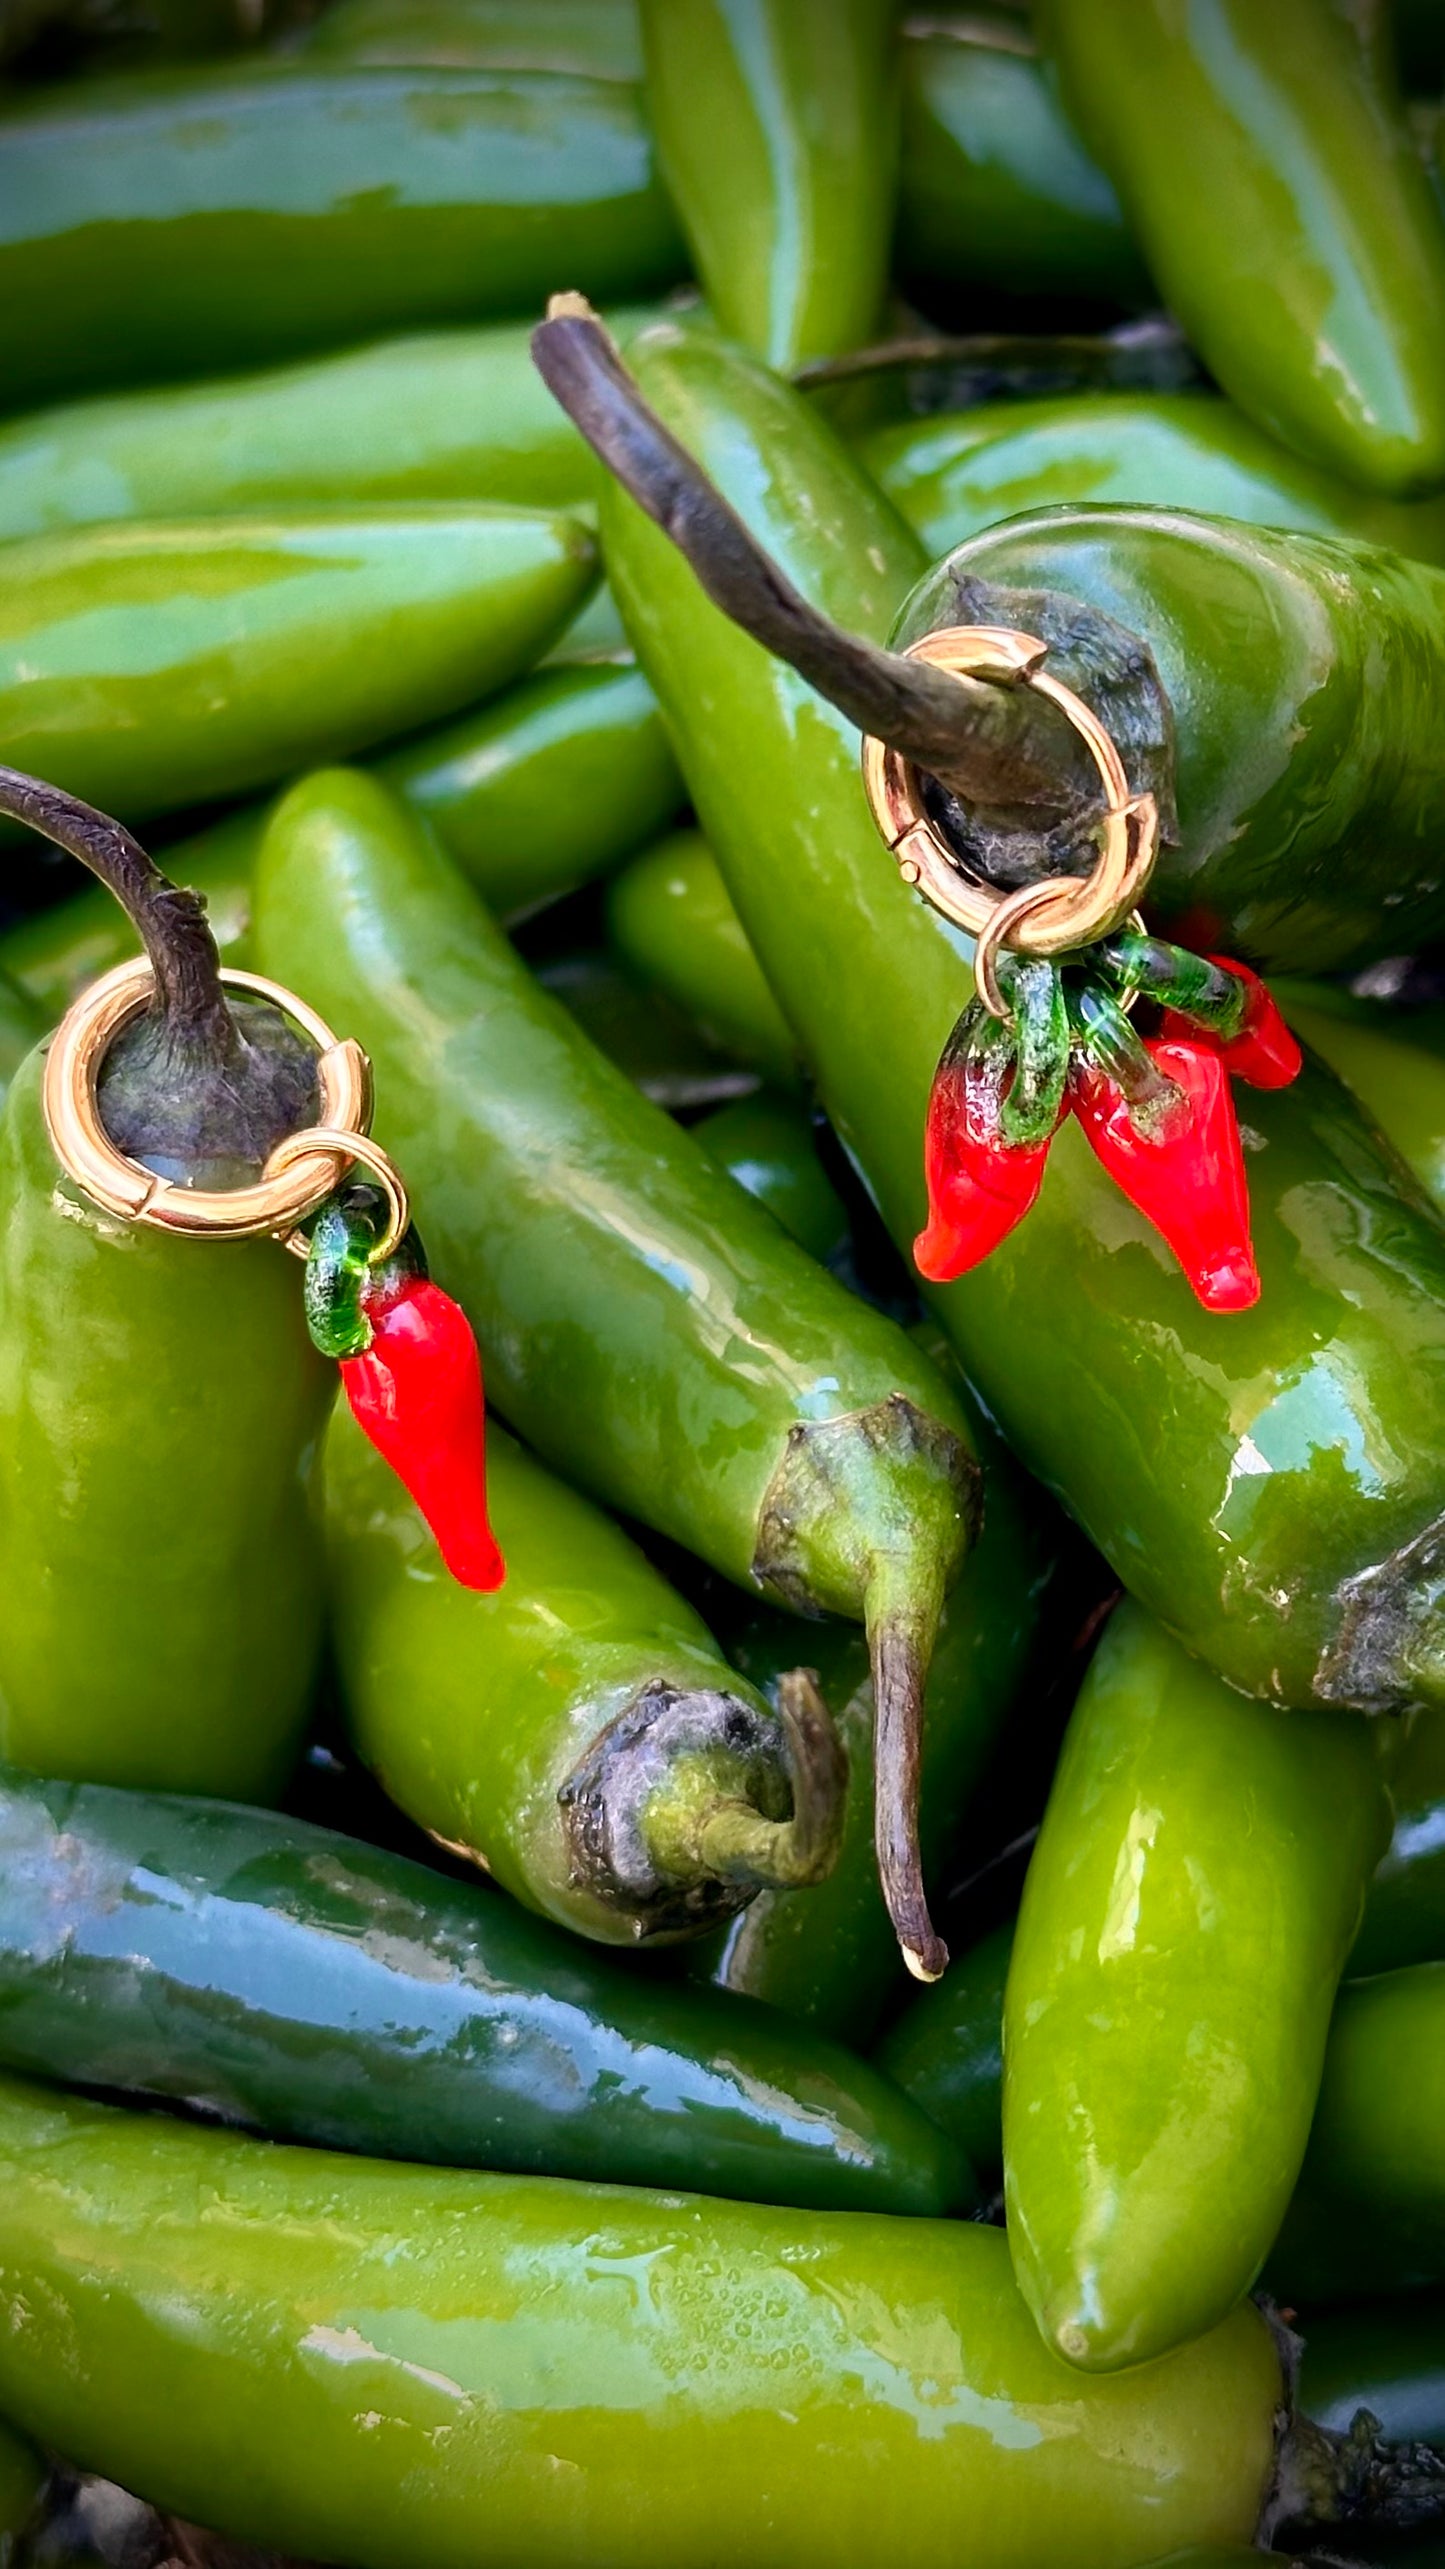 Chili Pepper Desigual Earrings